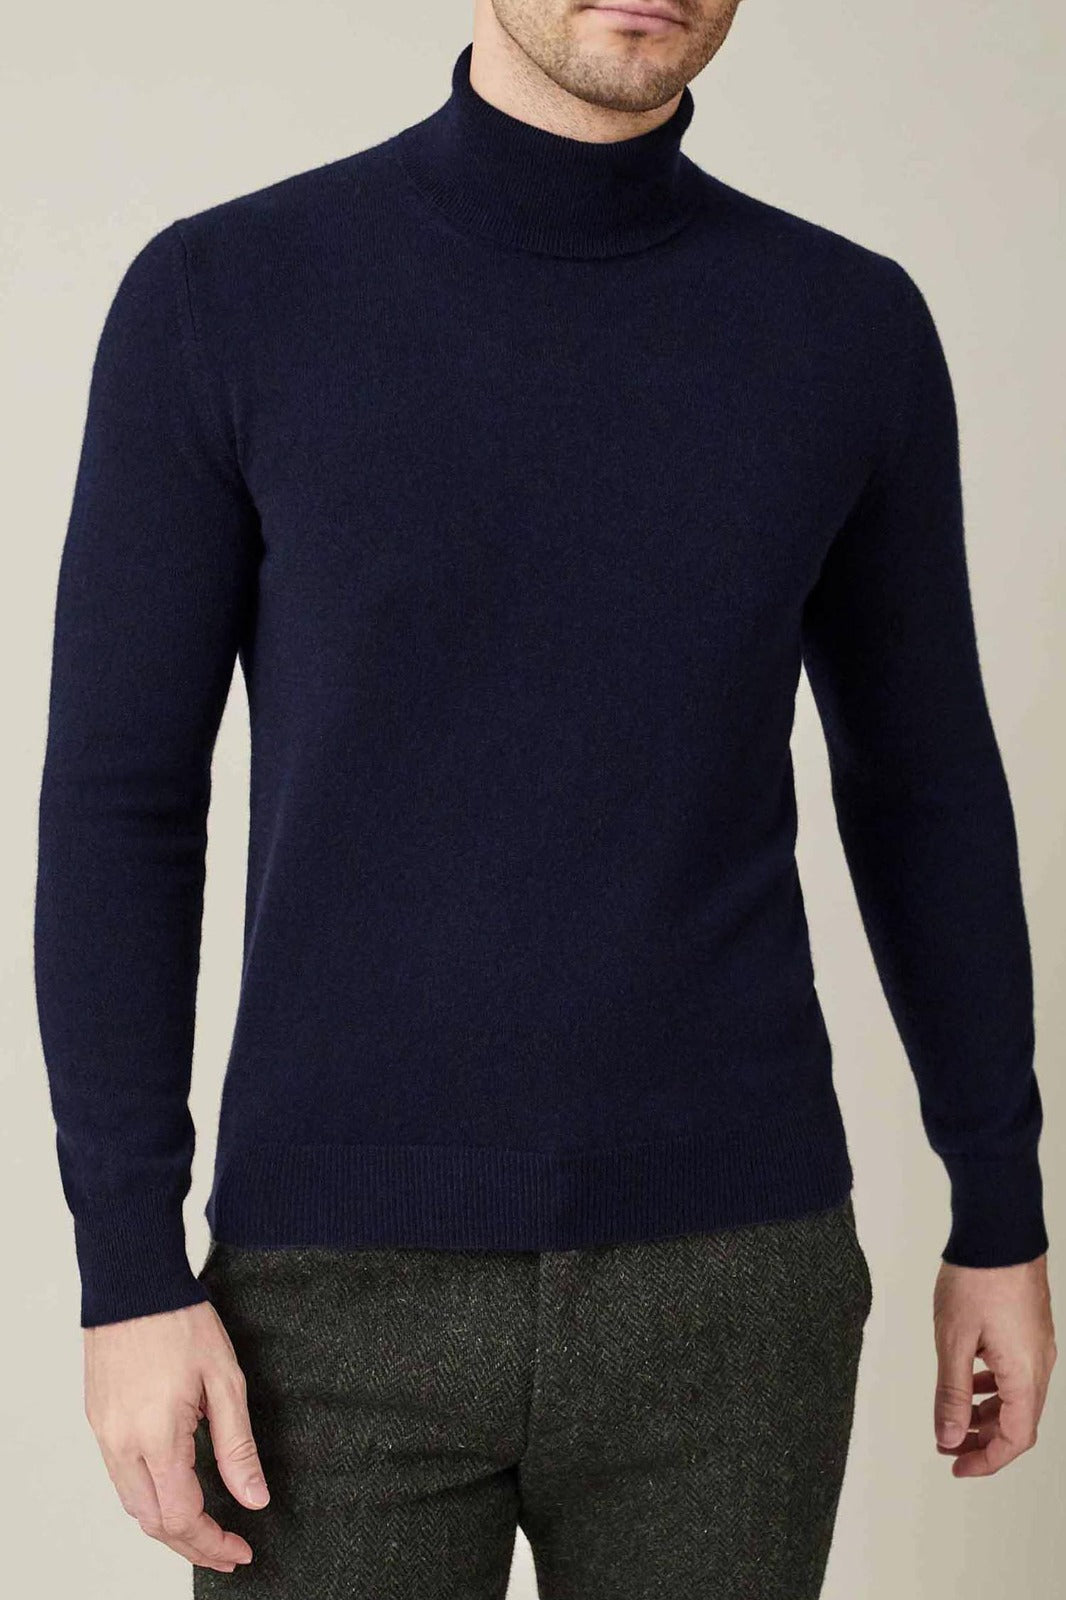 Warm Sweater High Neck In Navy Blue